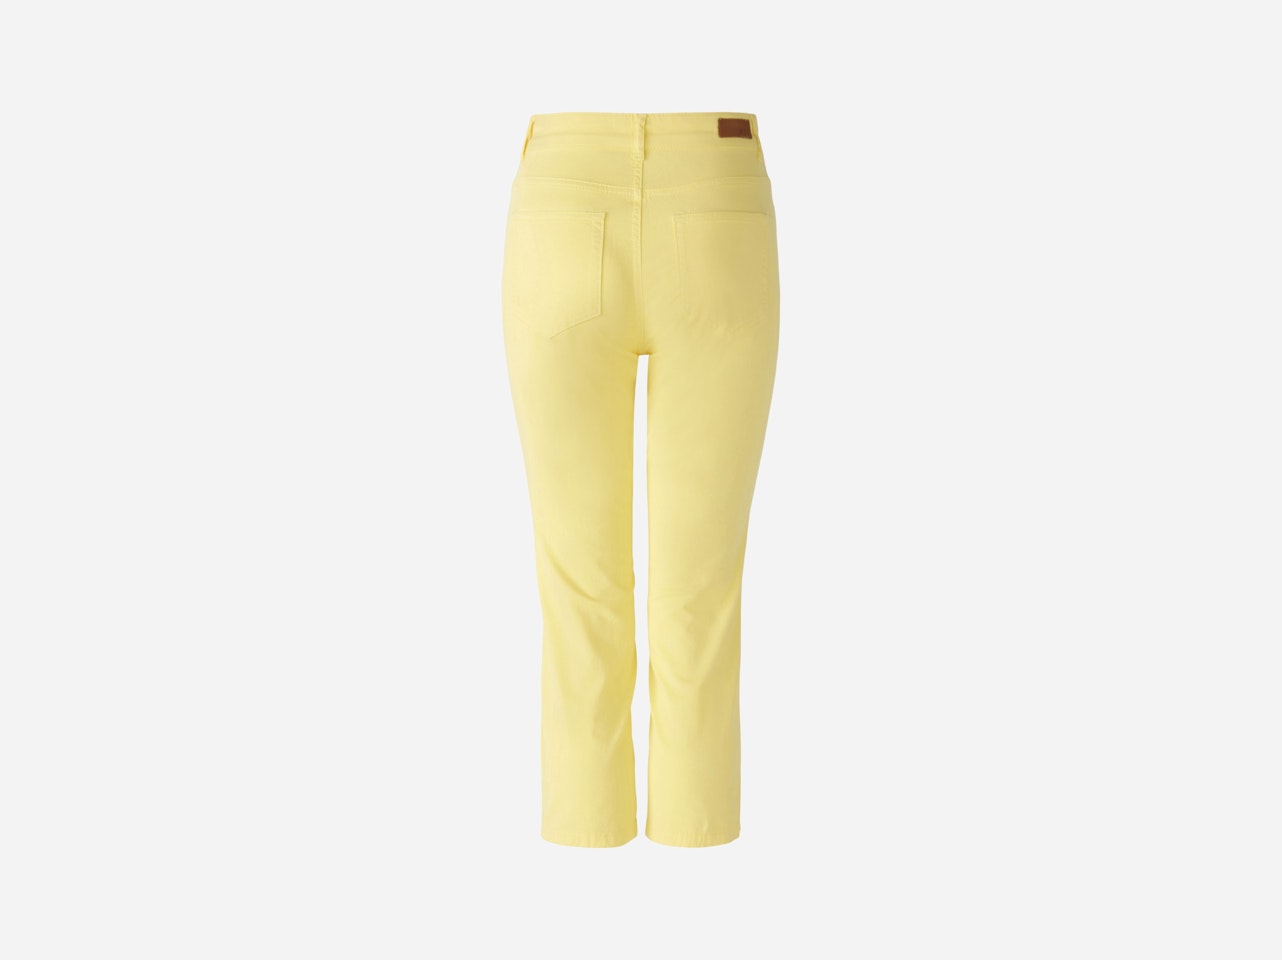 Bild 8 von Capri pants slim fit, mid waist in yellow | Oui